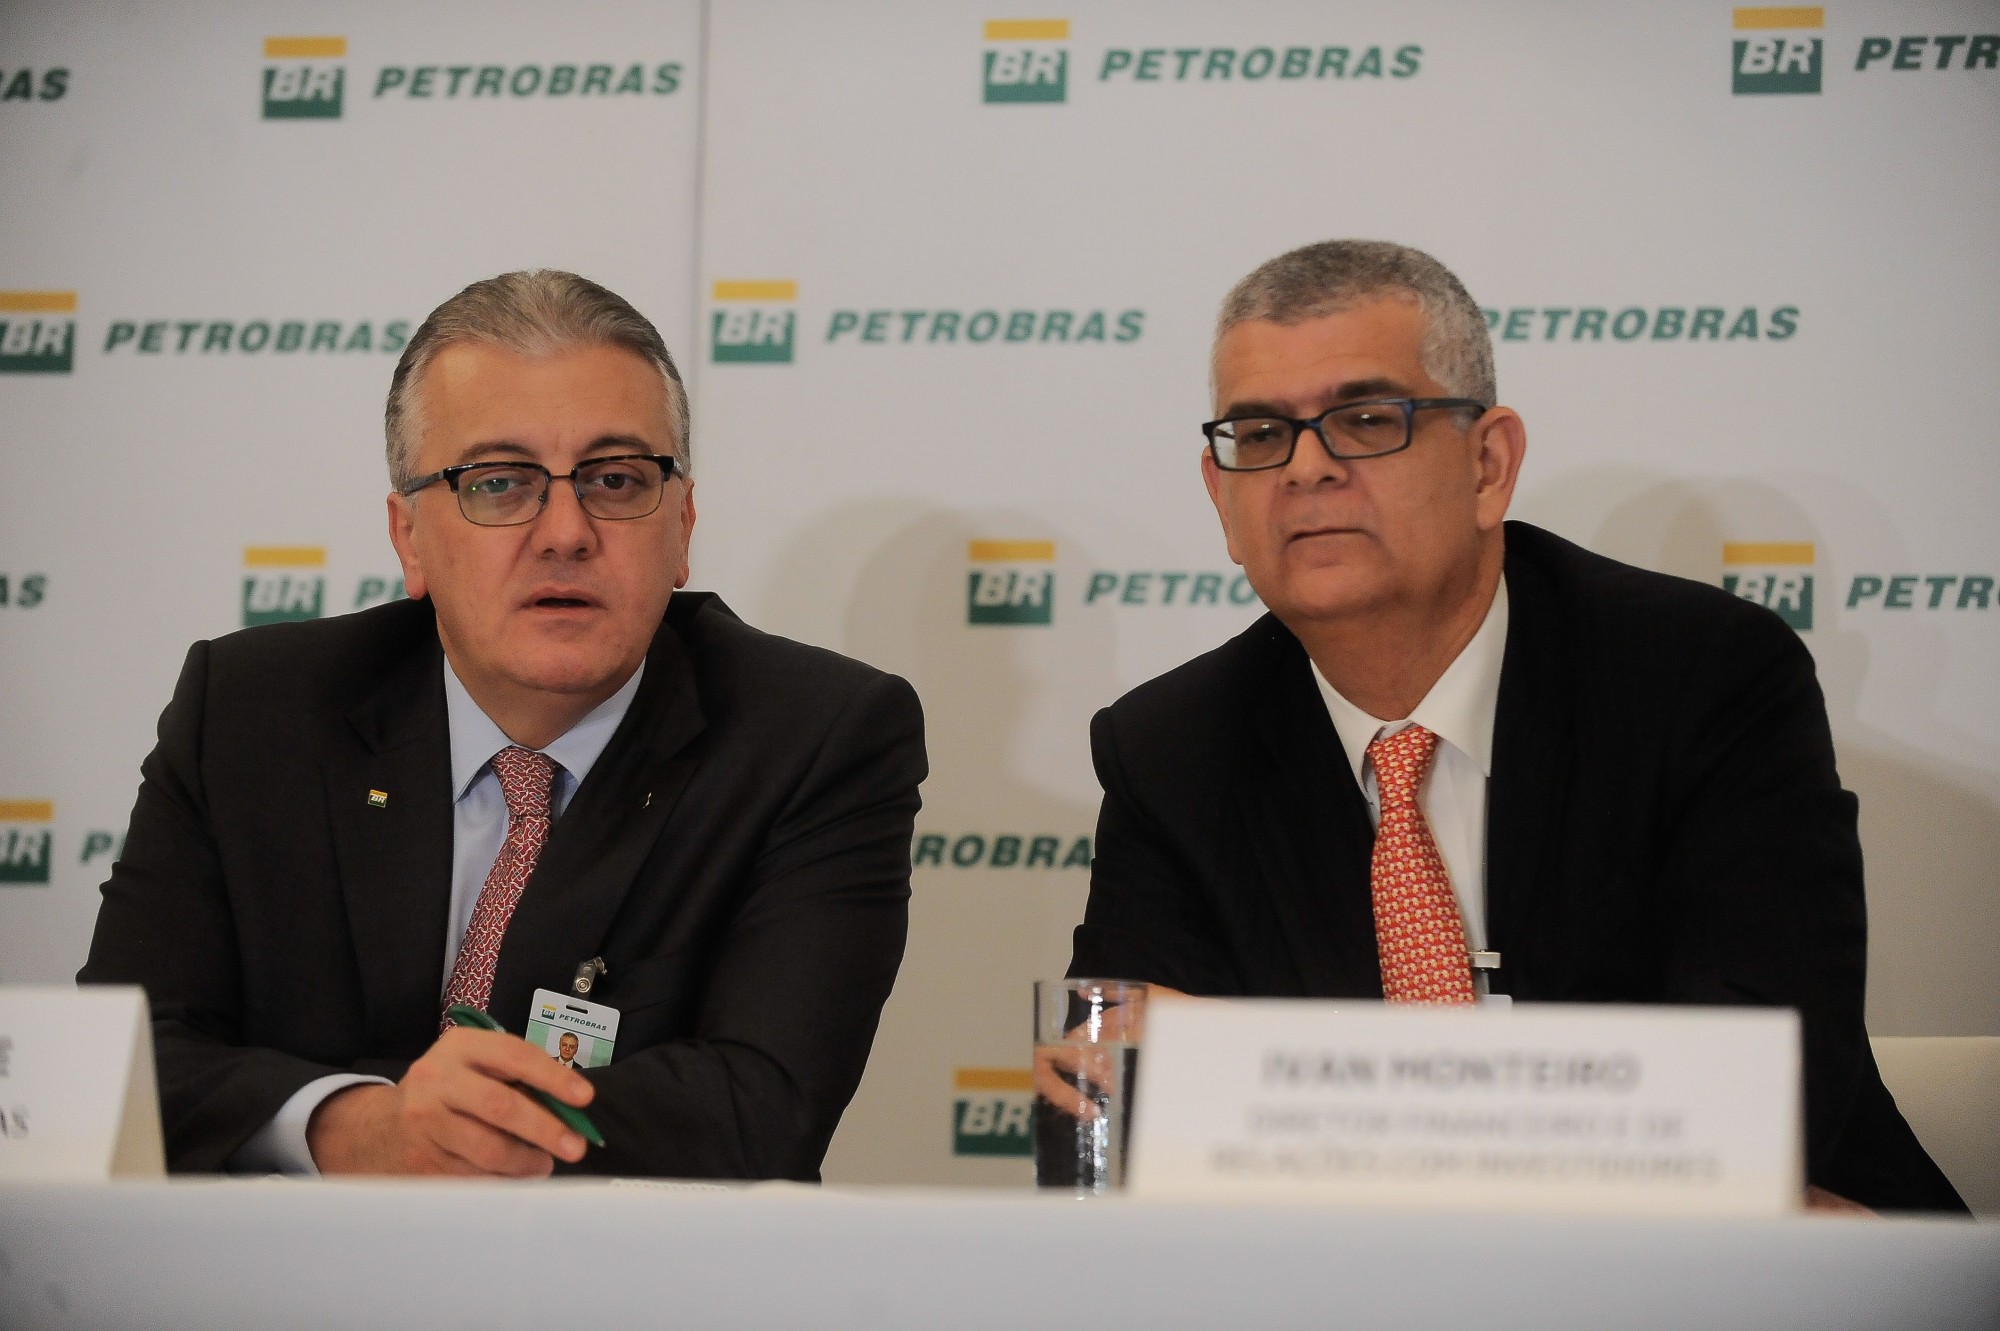 Brazil’s Petrobras Registers 90 Percent Drop in Q2 Net Income